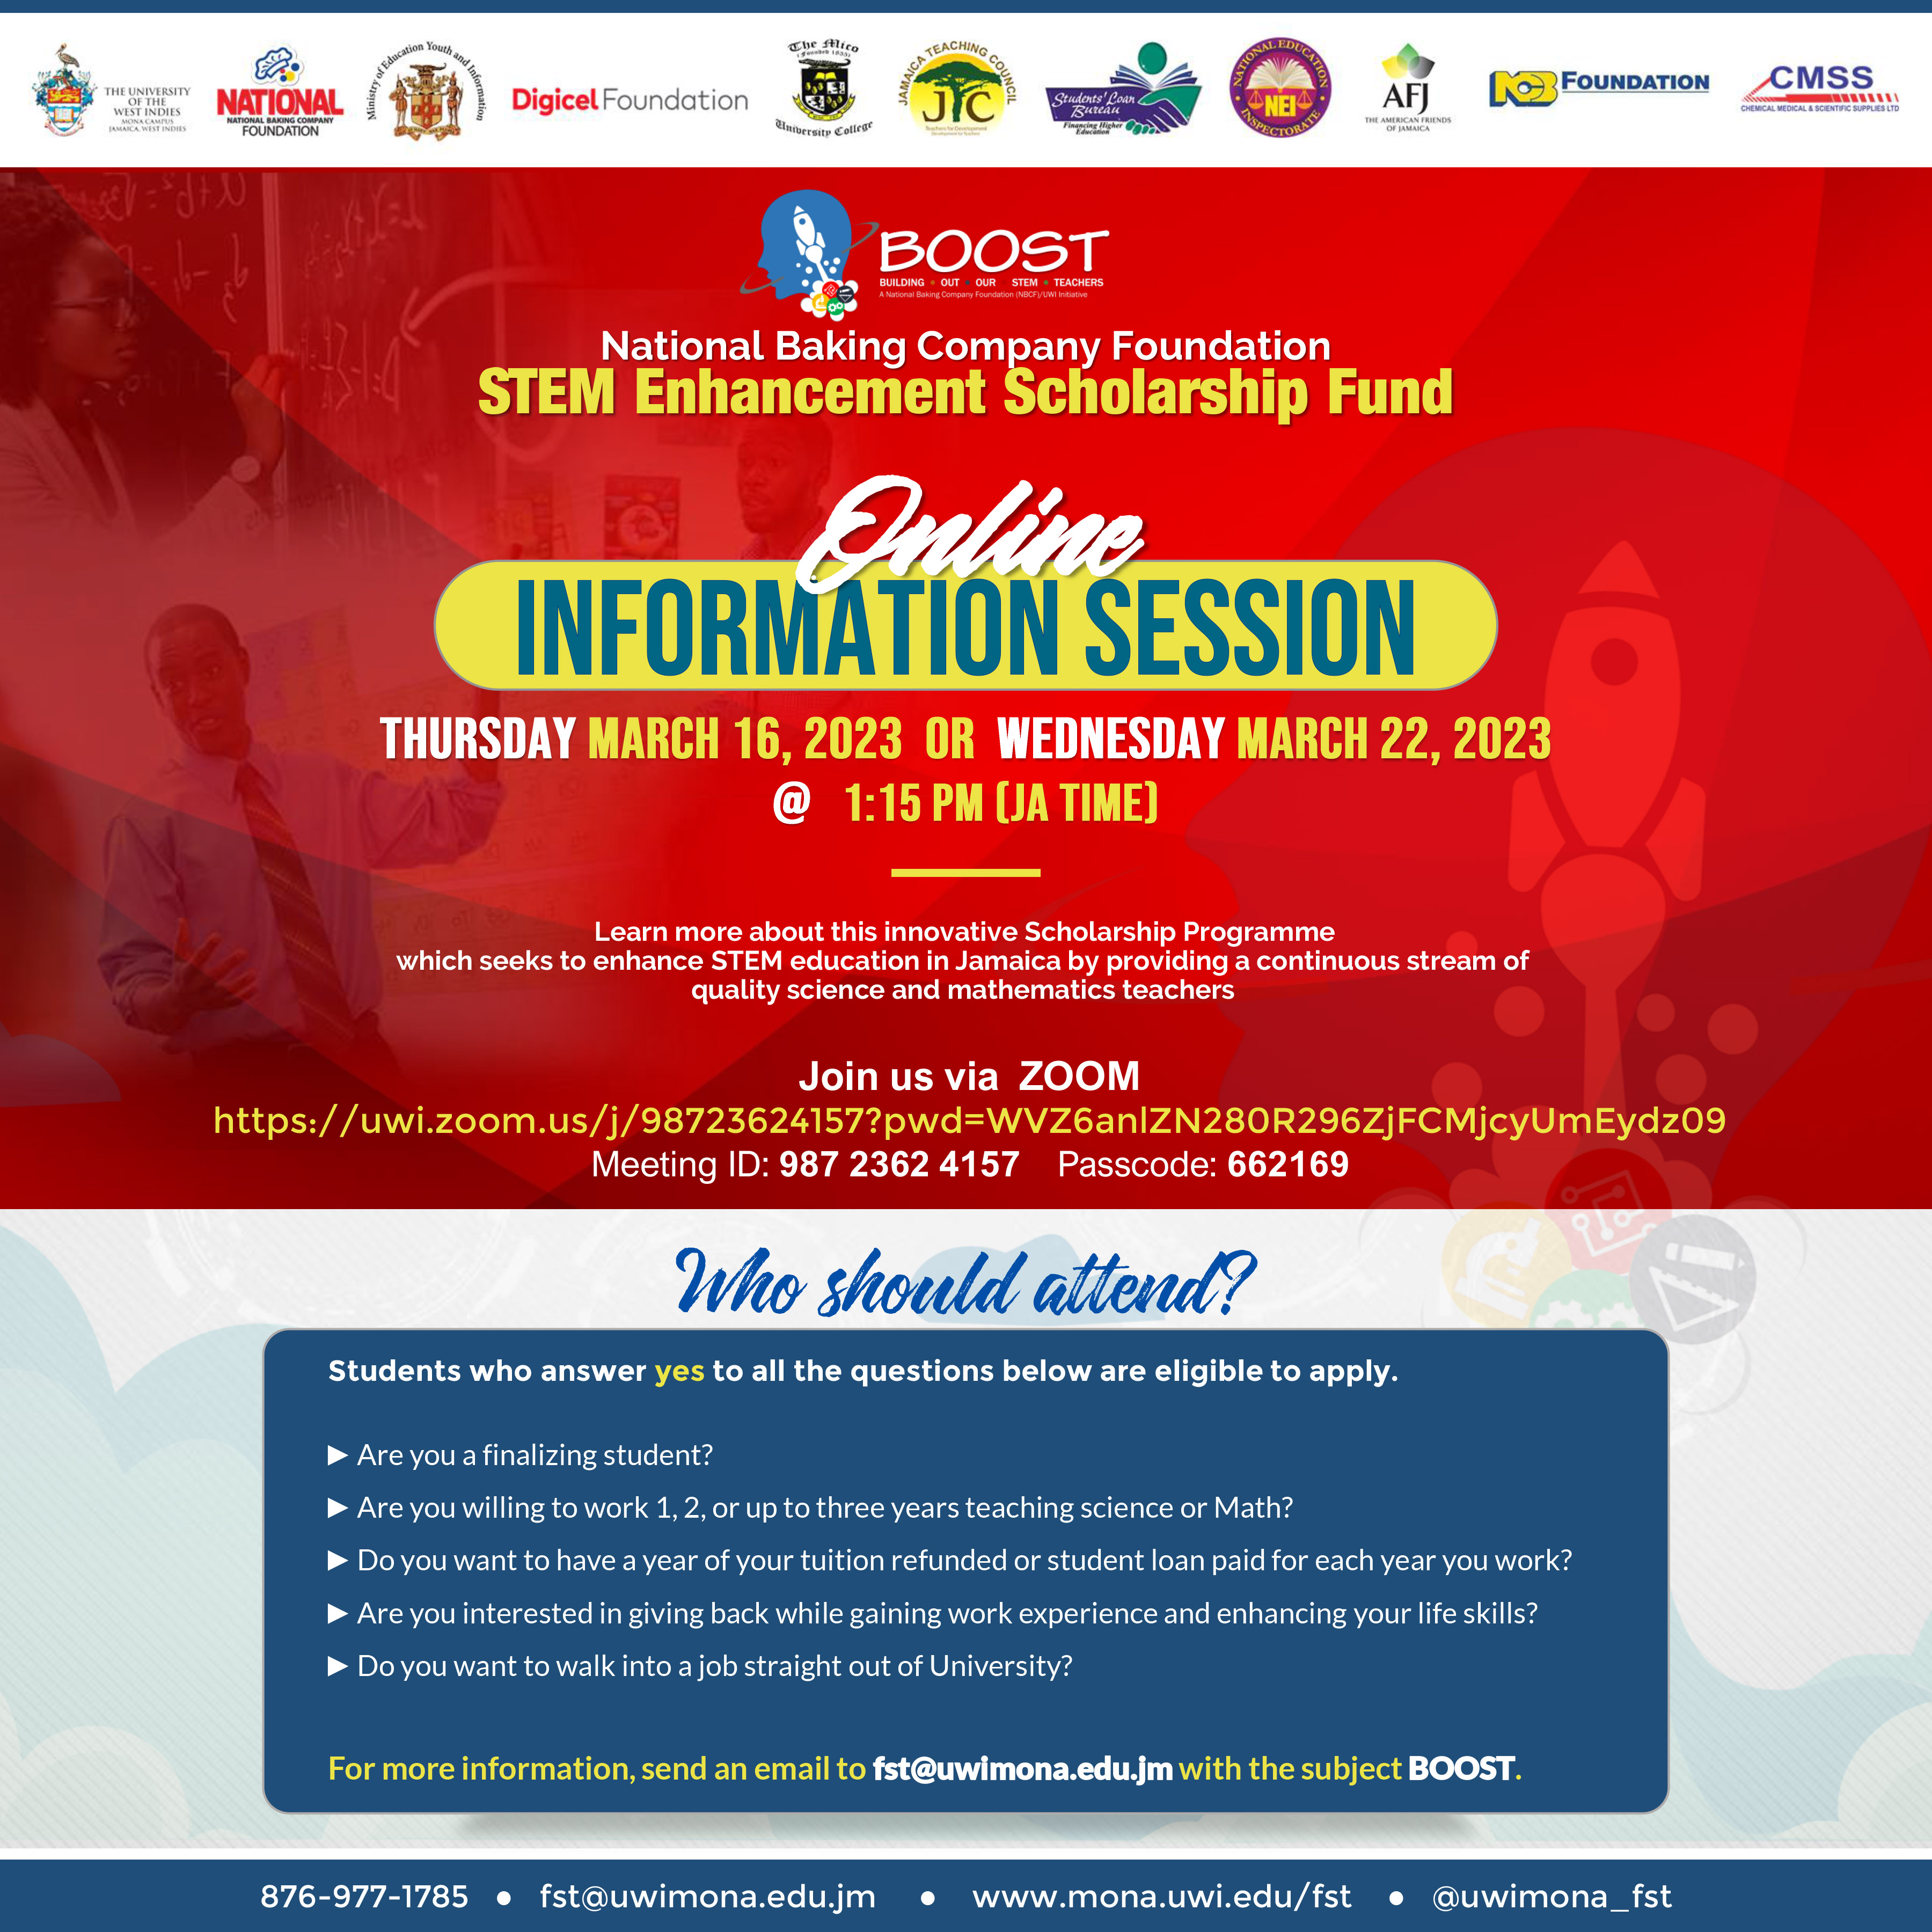  STEM Enhancement Scholarship Fund: Online Information Session